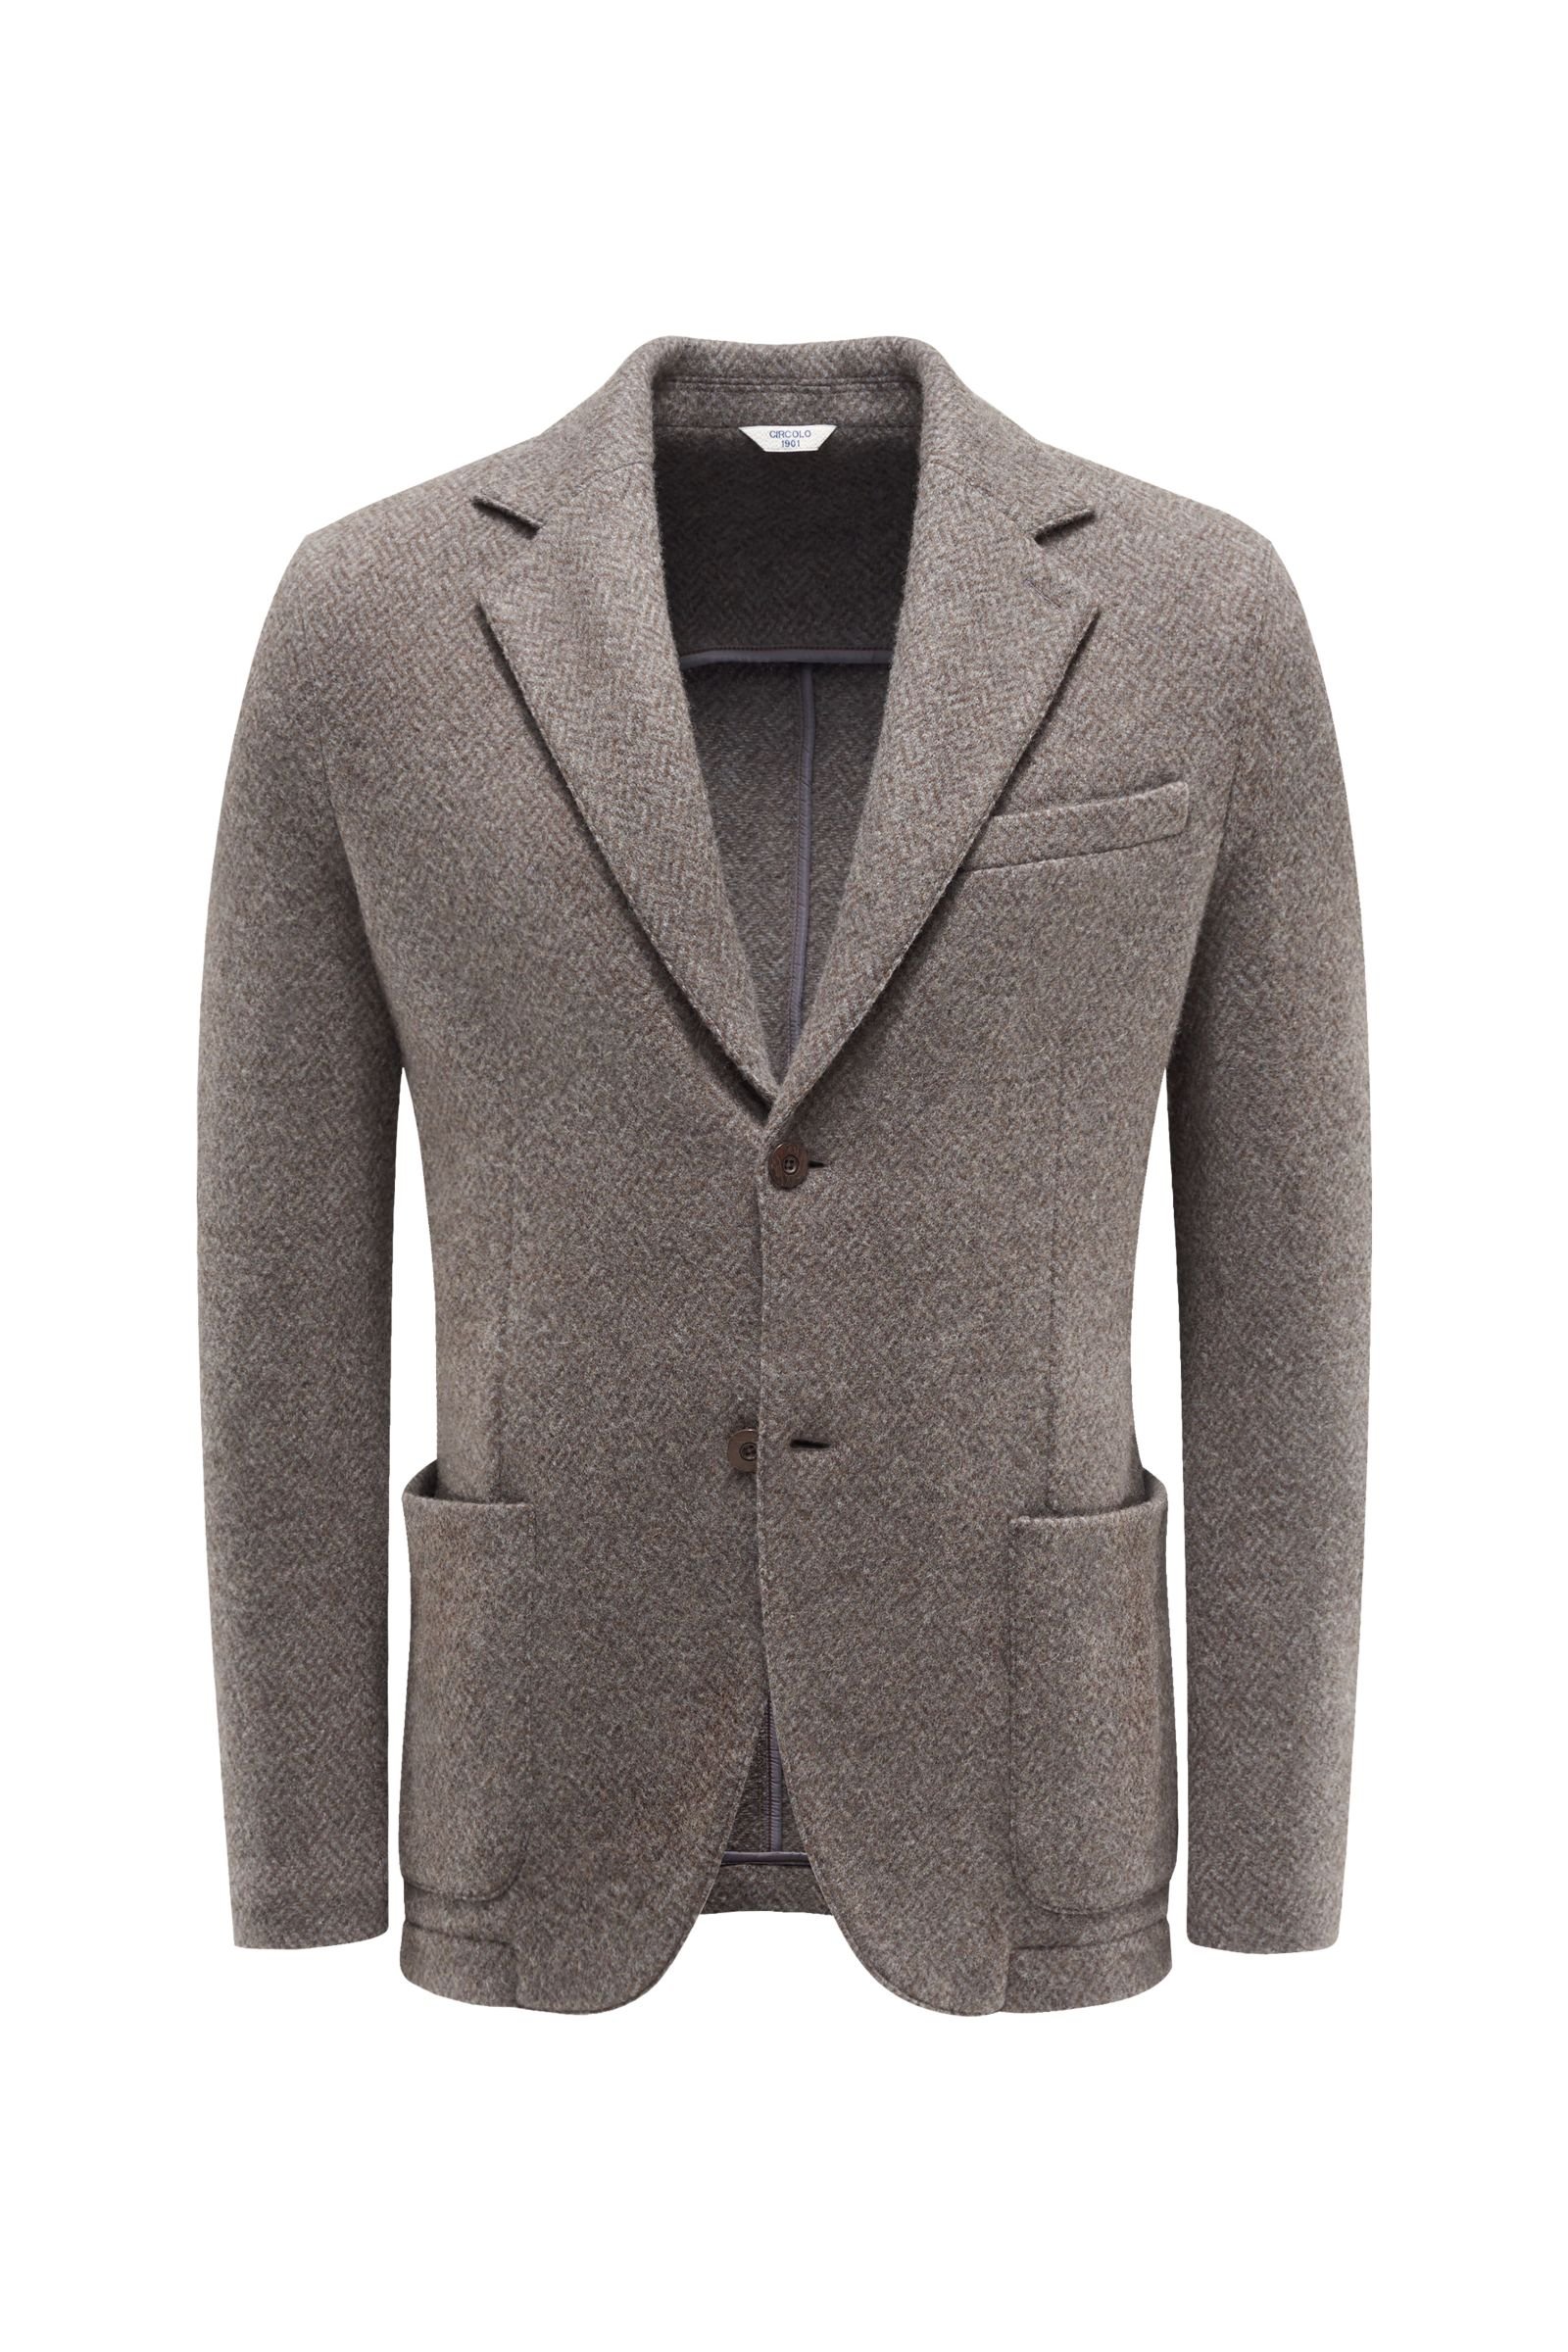 Jersey-Blazer brown/grey patterned